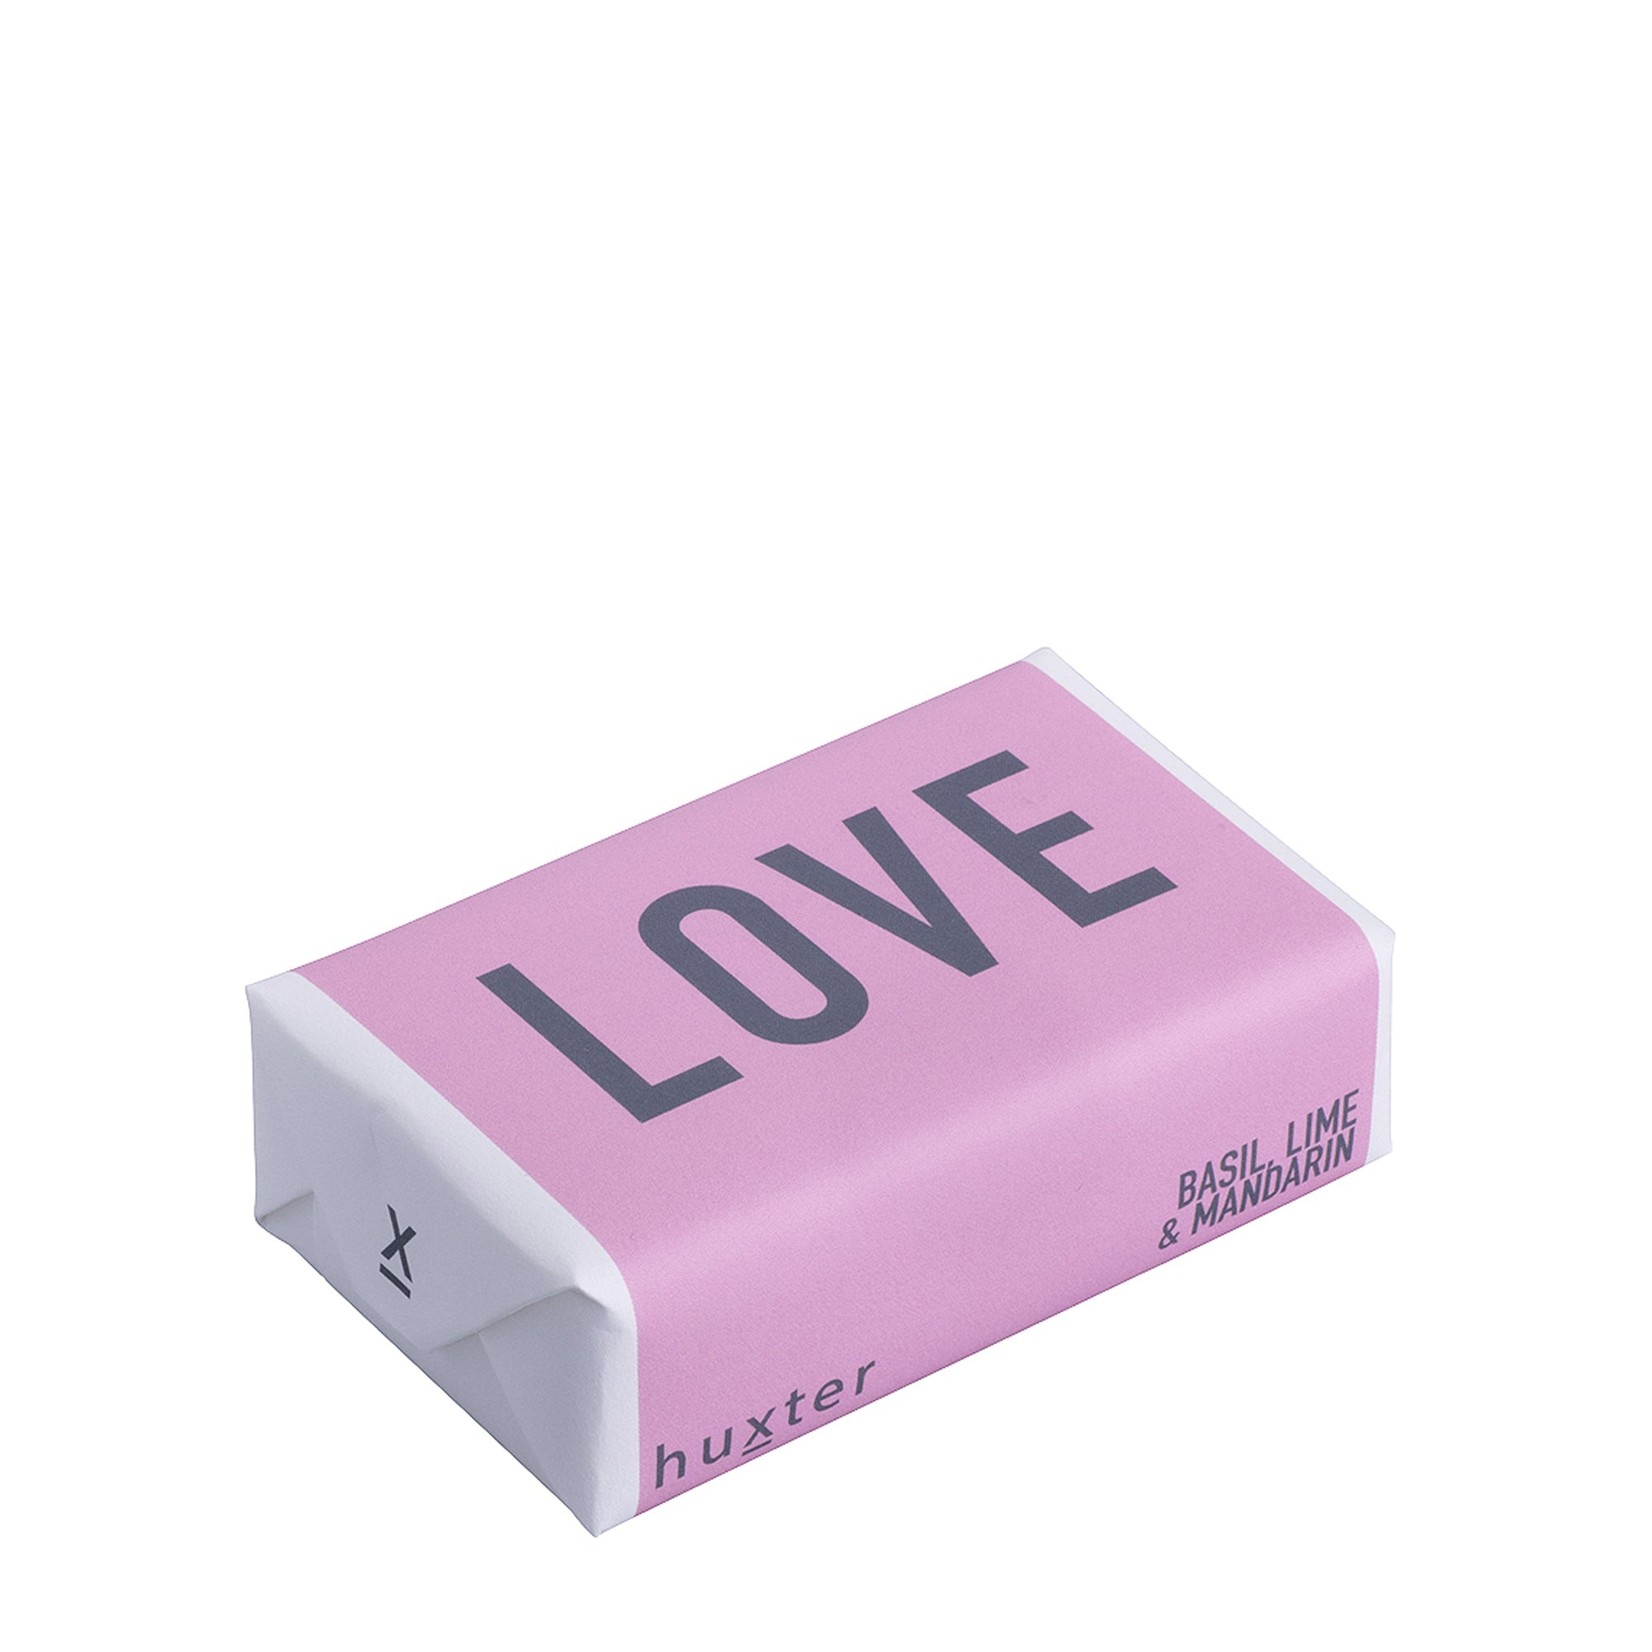 Love - Pink w/Grey